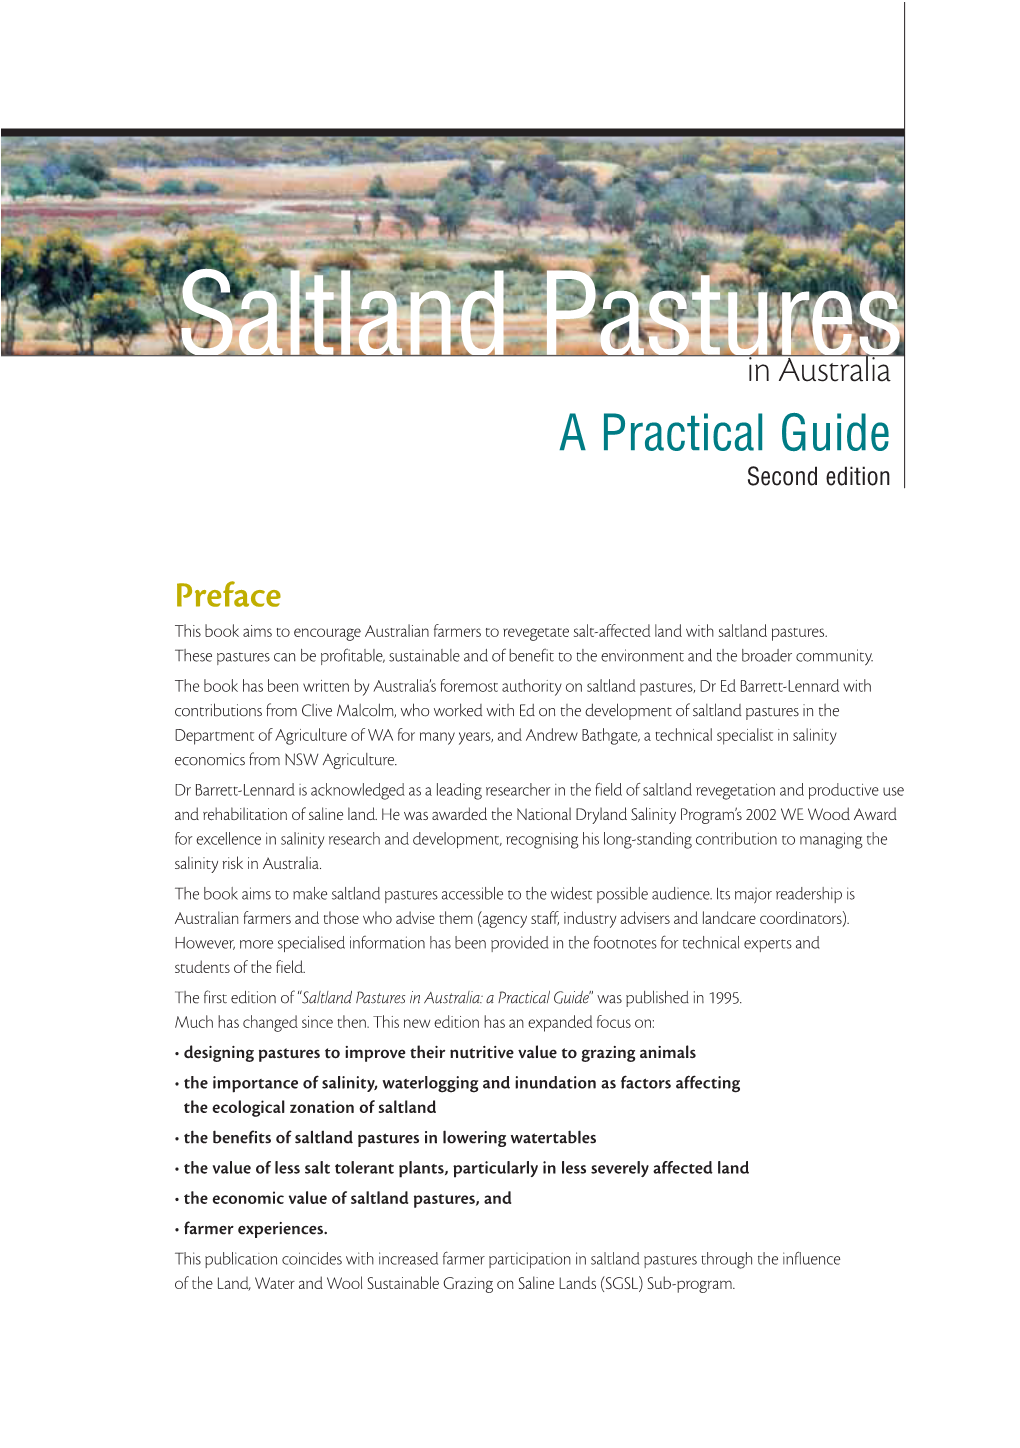 Saltland Pasturesin Australia a Practical Guide Second Edition